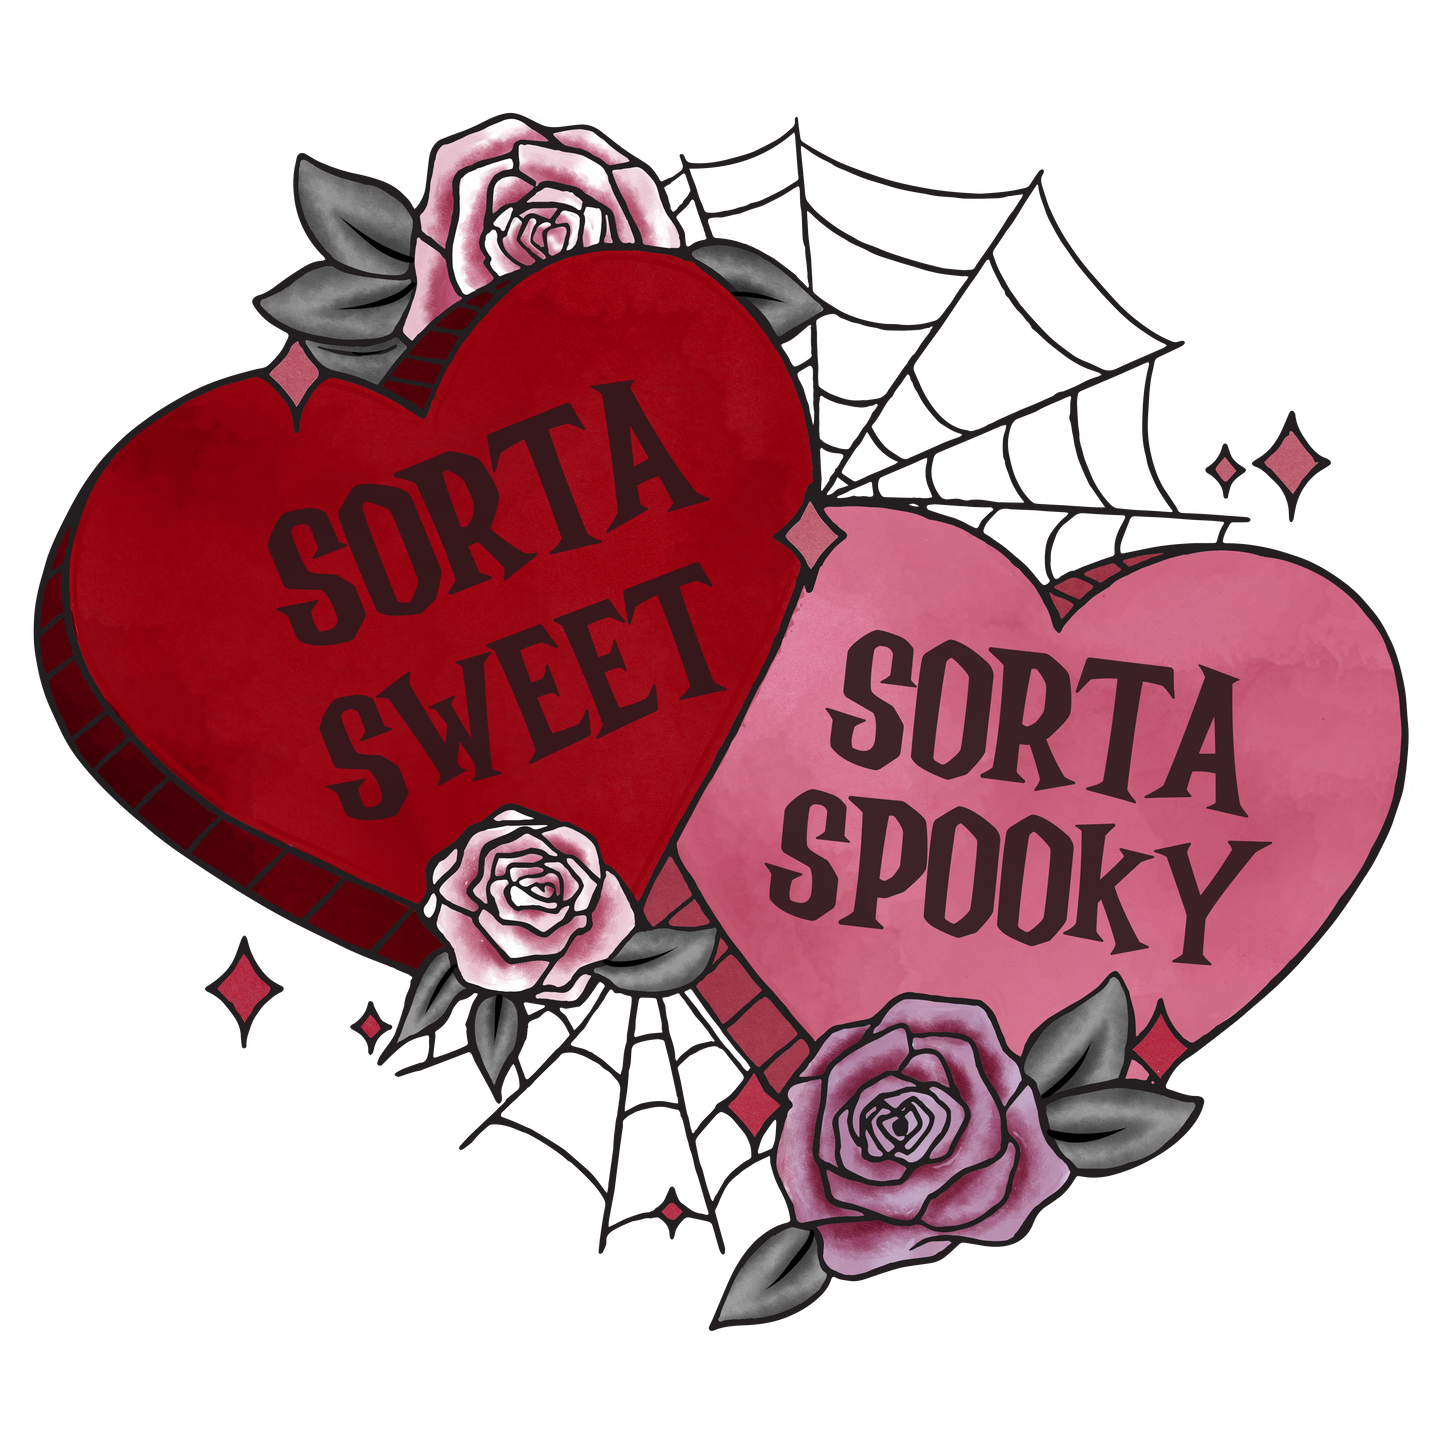 VALENTINE'S DAY PRINT 224 - Sorta sweet sorta spooky